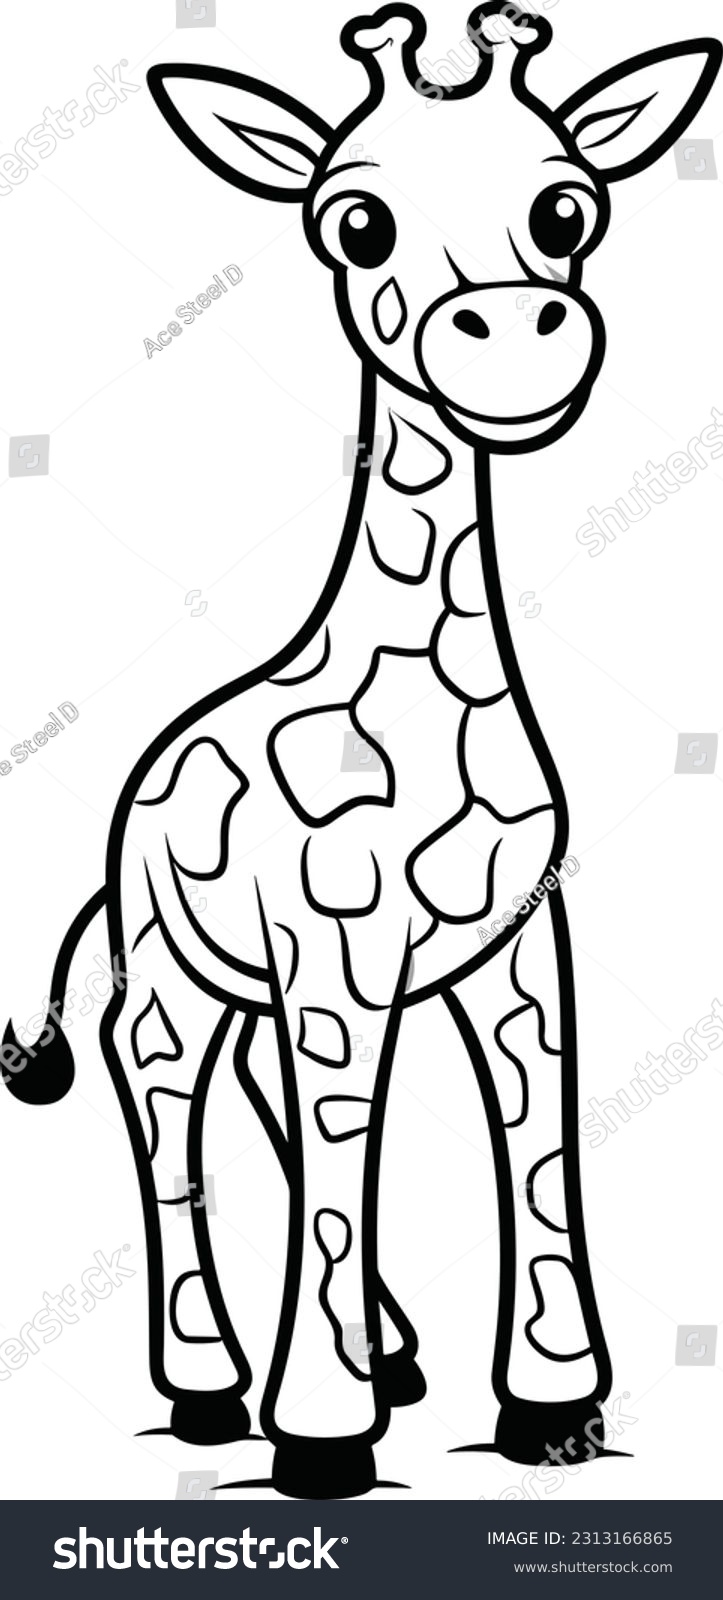 Giraffe colouring book stock photos and pictures